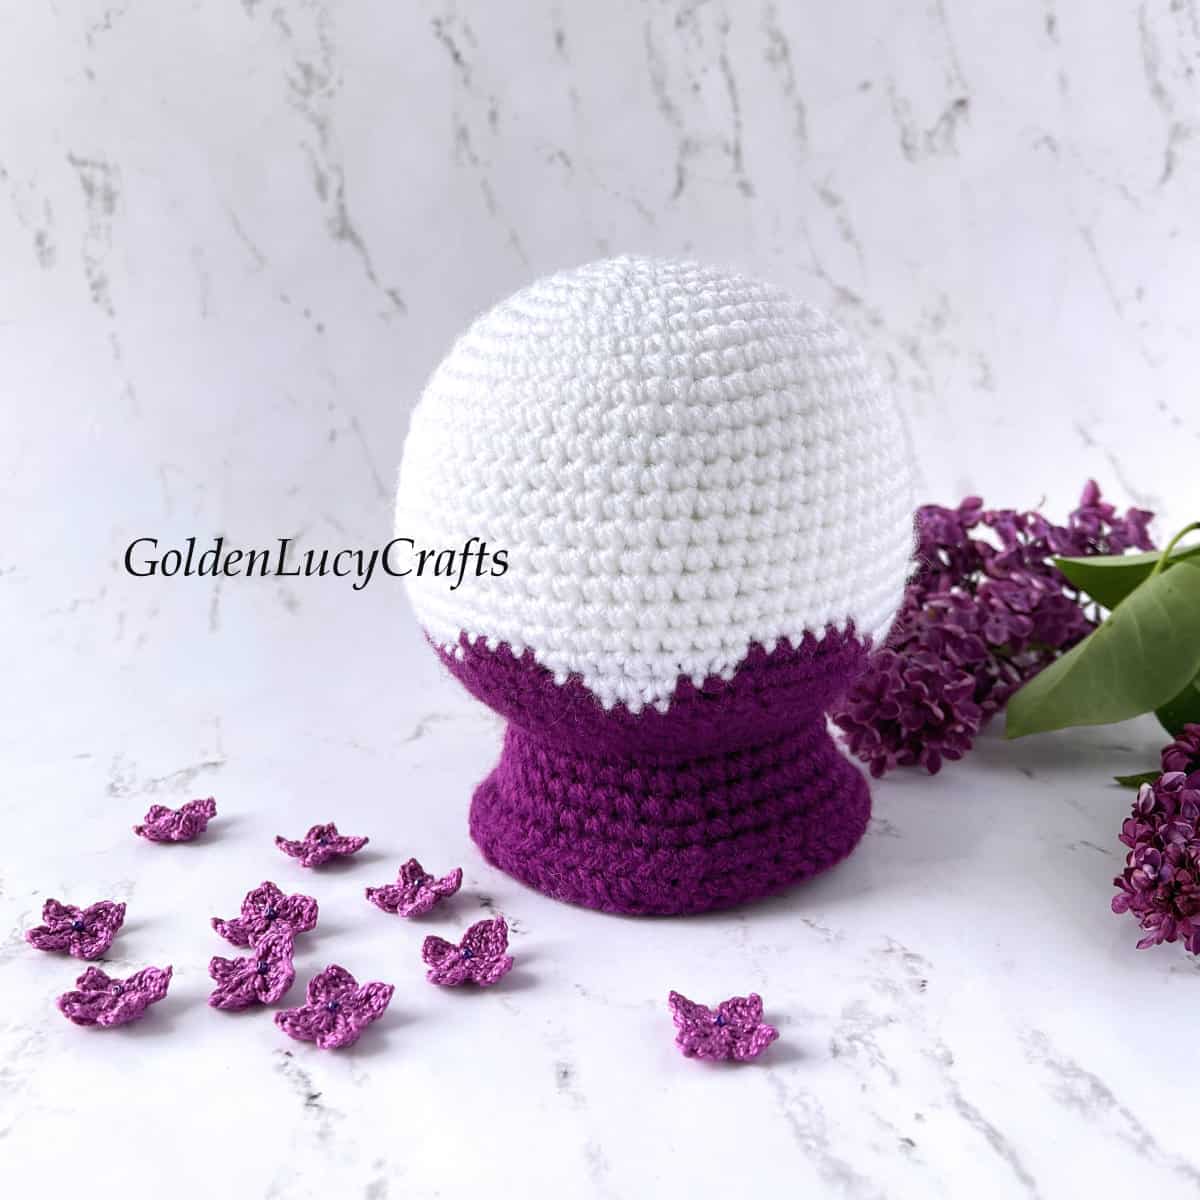 Crochet snow globe, crochet lilac flowers.